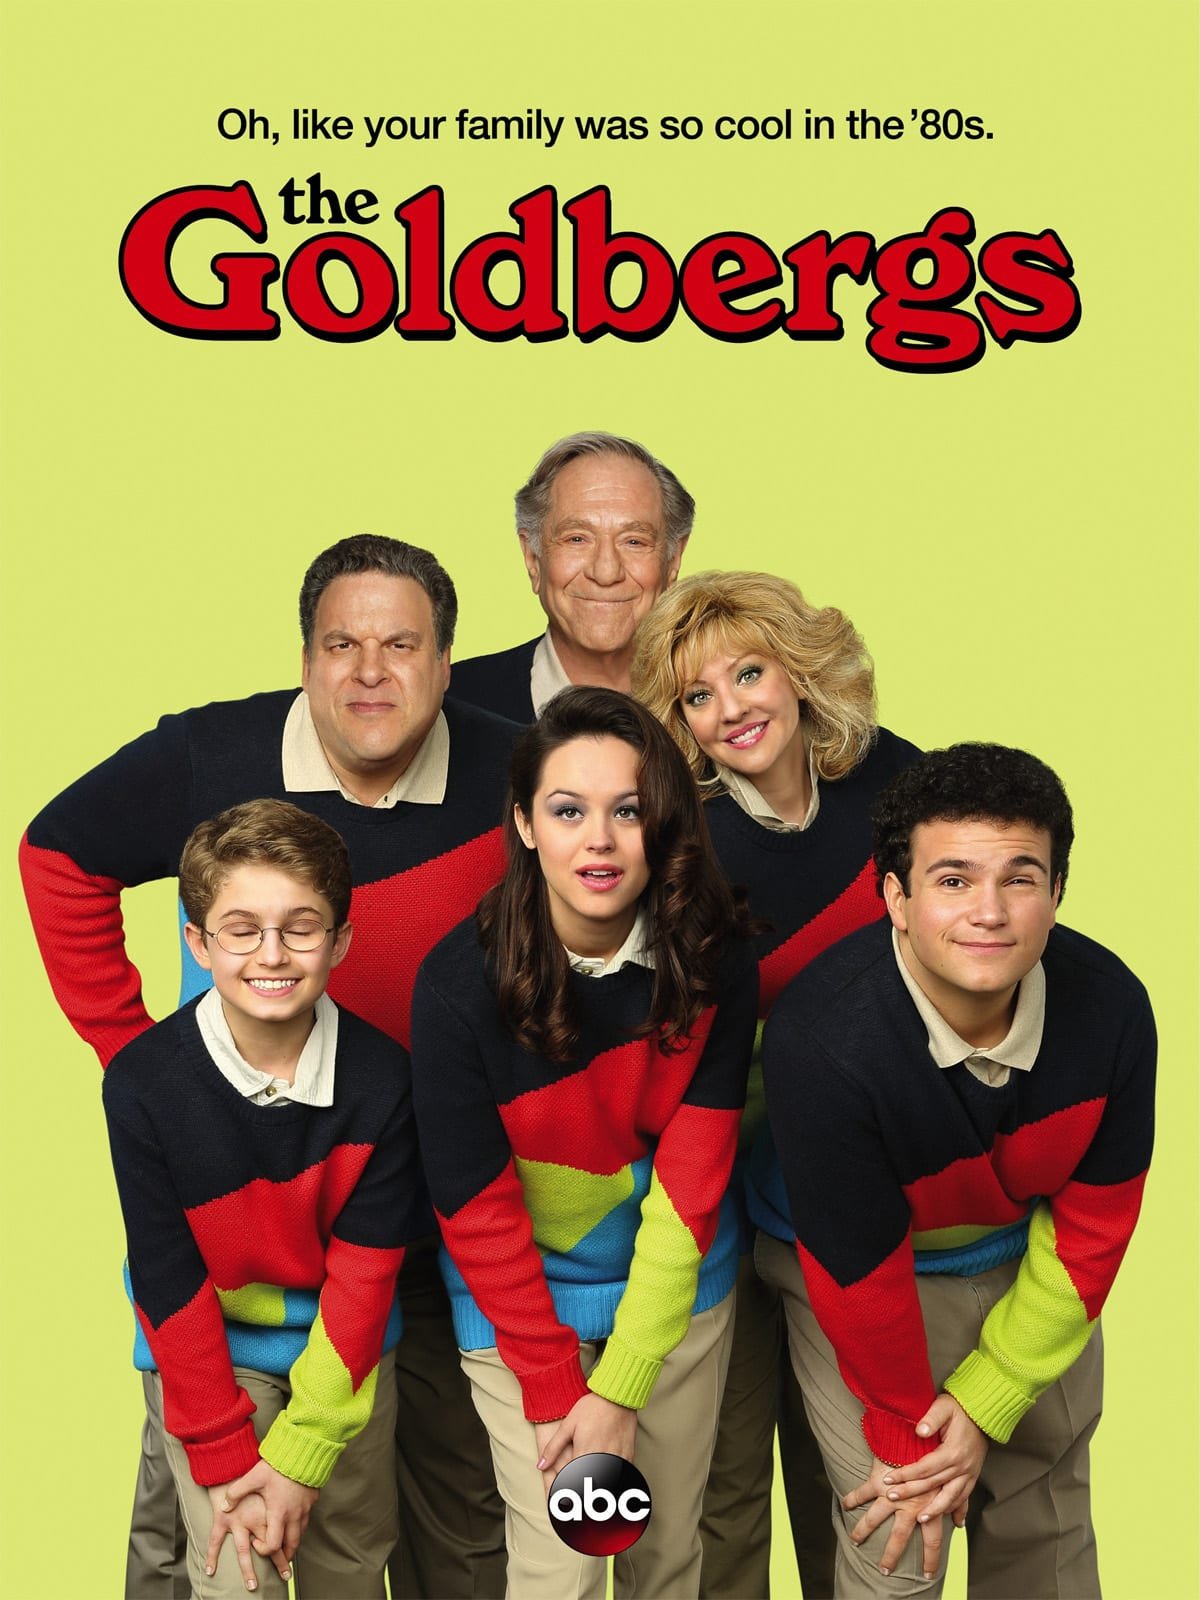 The Goldbergs Season 10 Release Date